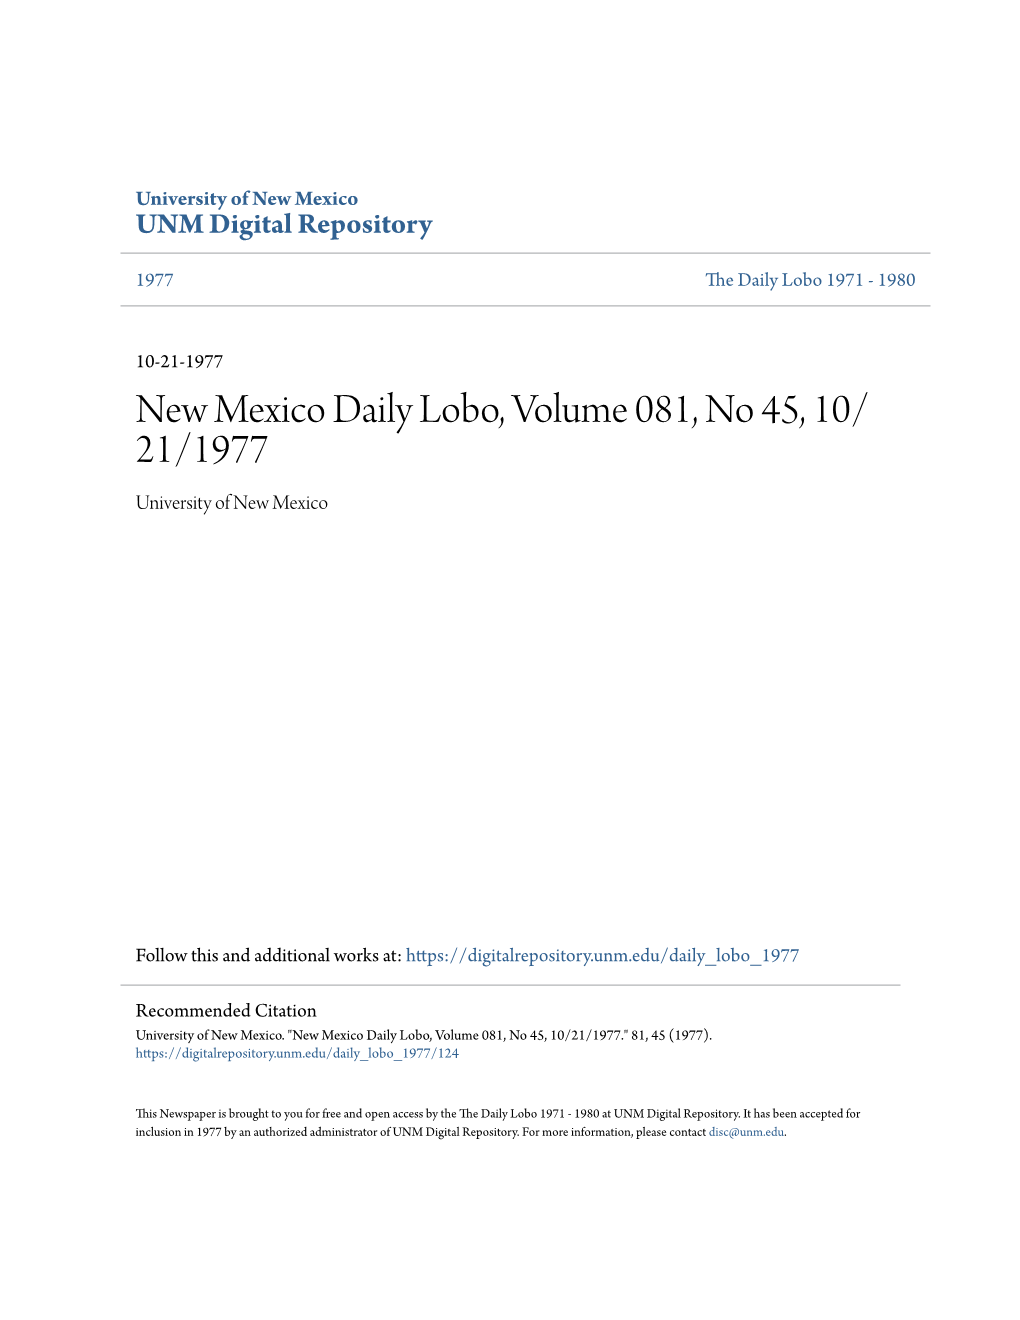 New Mexico Daily Lobo, Volume 081, No 45, 10/21/1977." 81, 45 (1977)